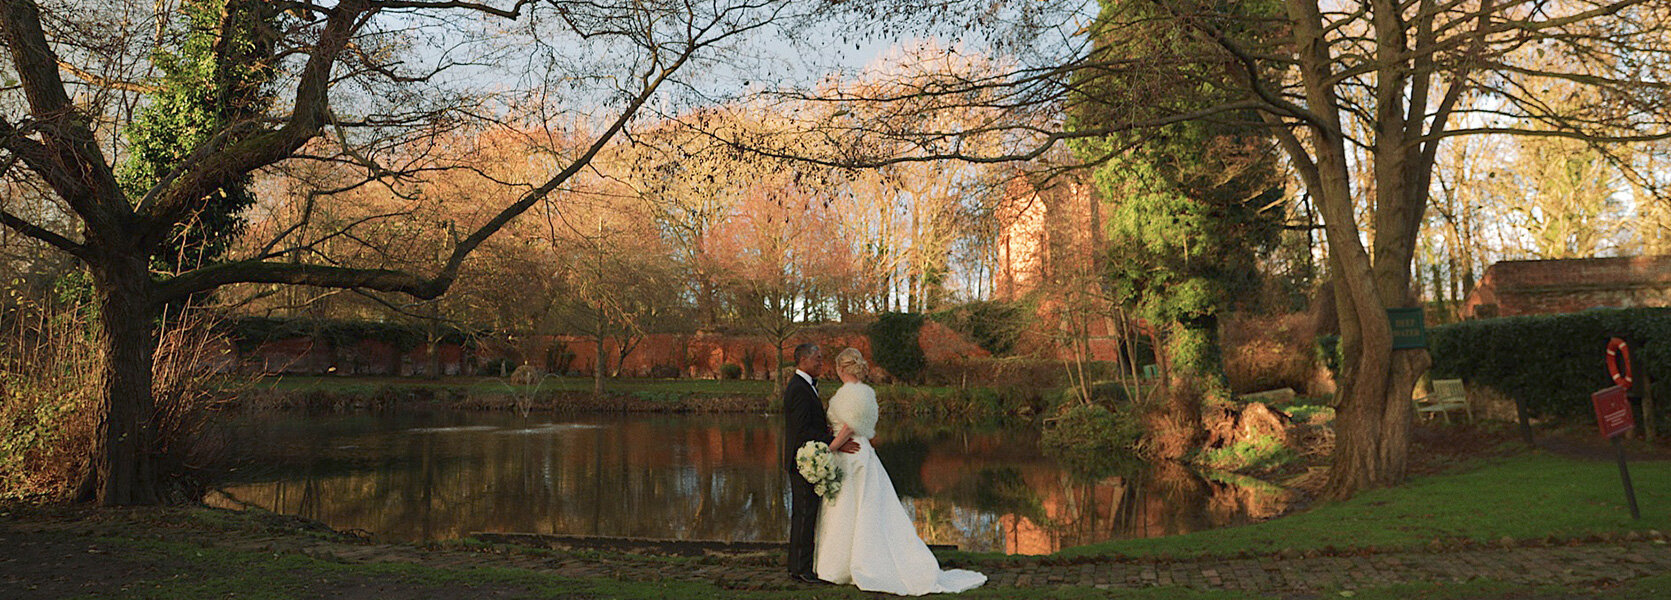 Leez Priory wedding videography Essex